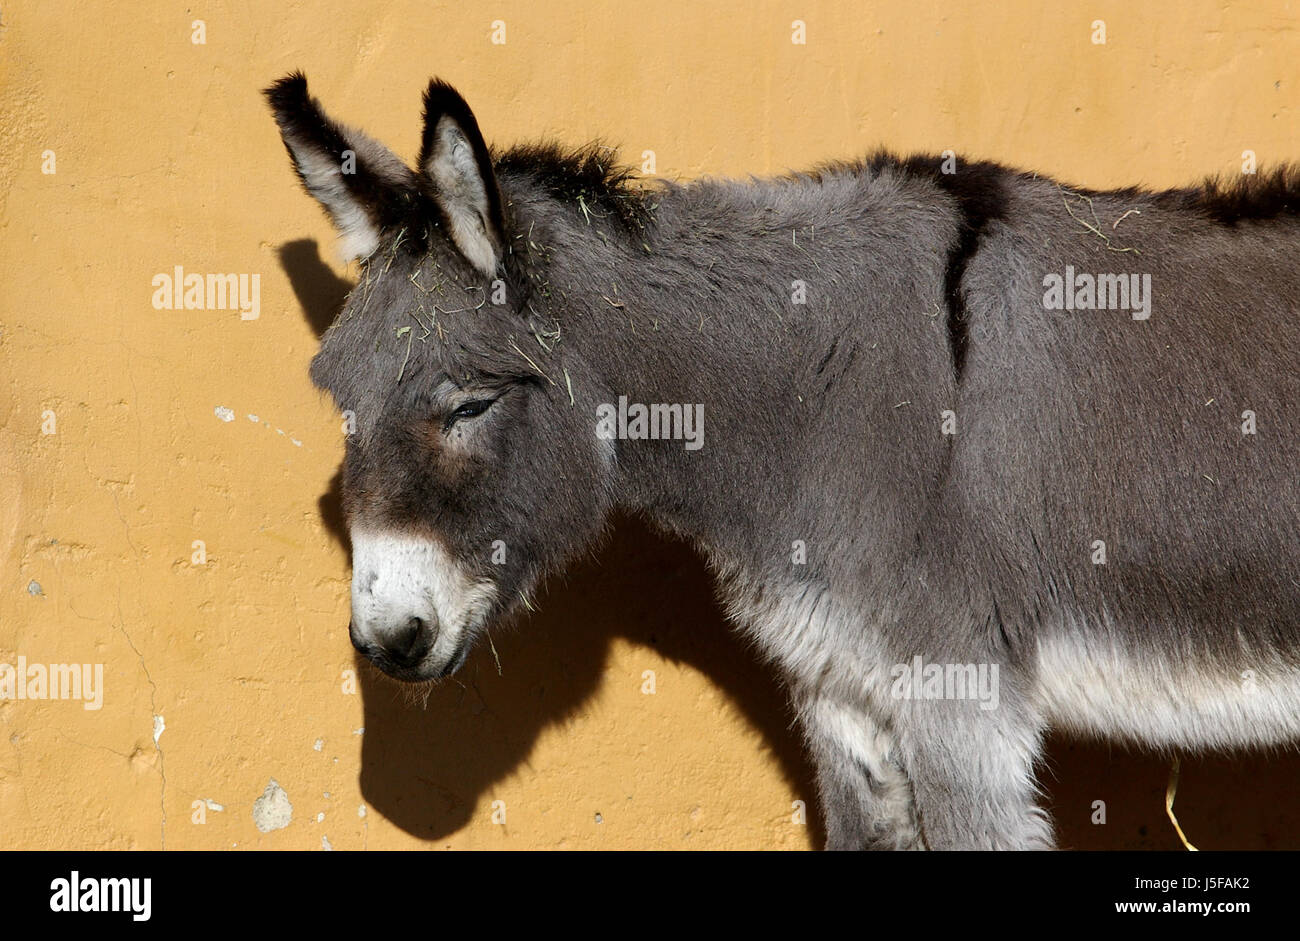 sad ears skin horse horses mammals donkey pack animal frugal pack-animal Stock Photo